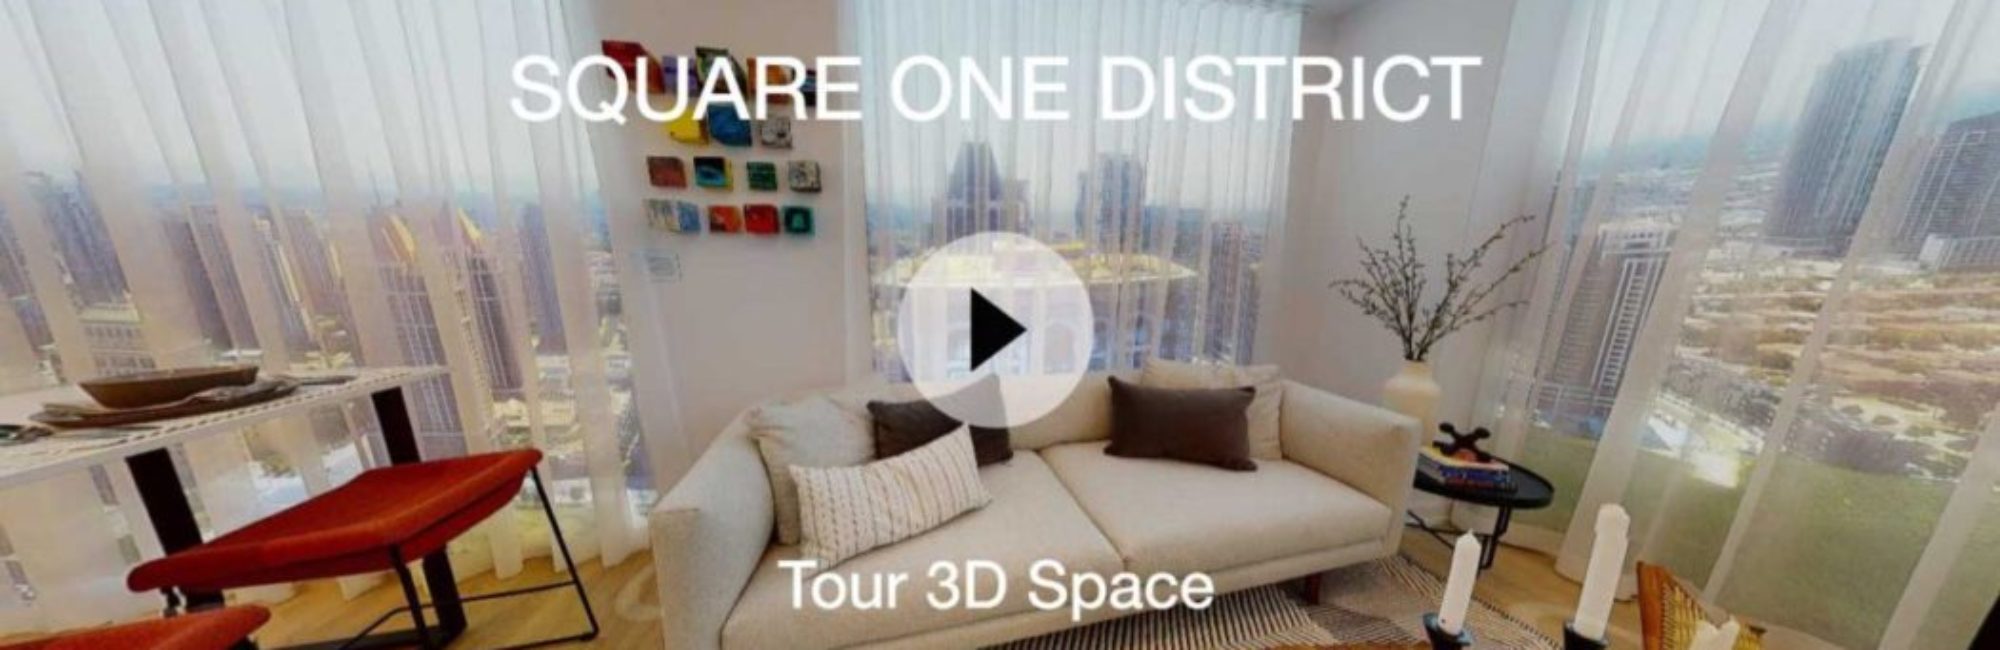 Tour a Square One District condo suite